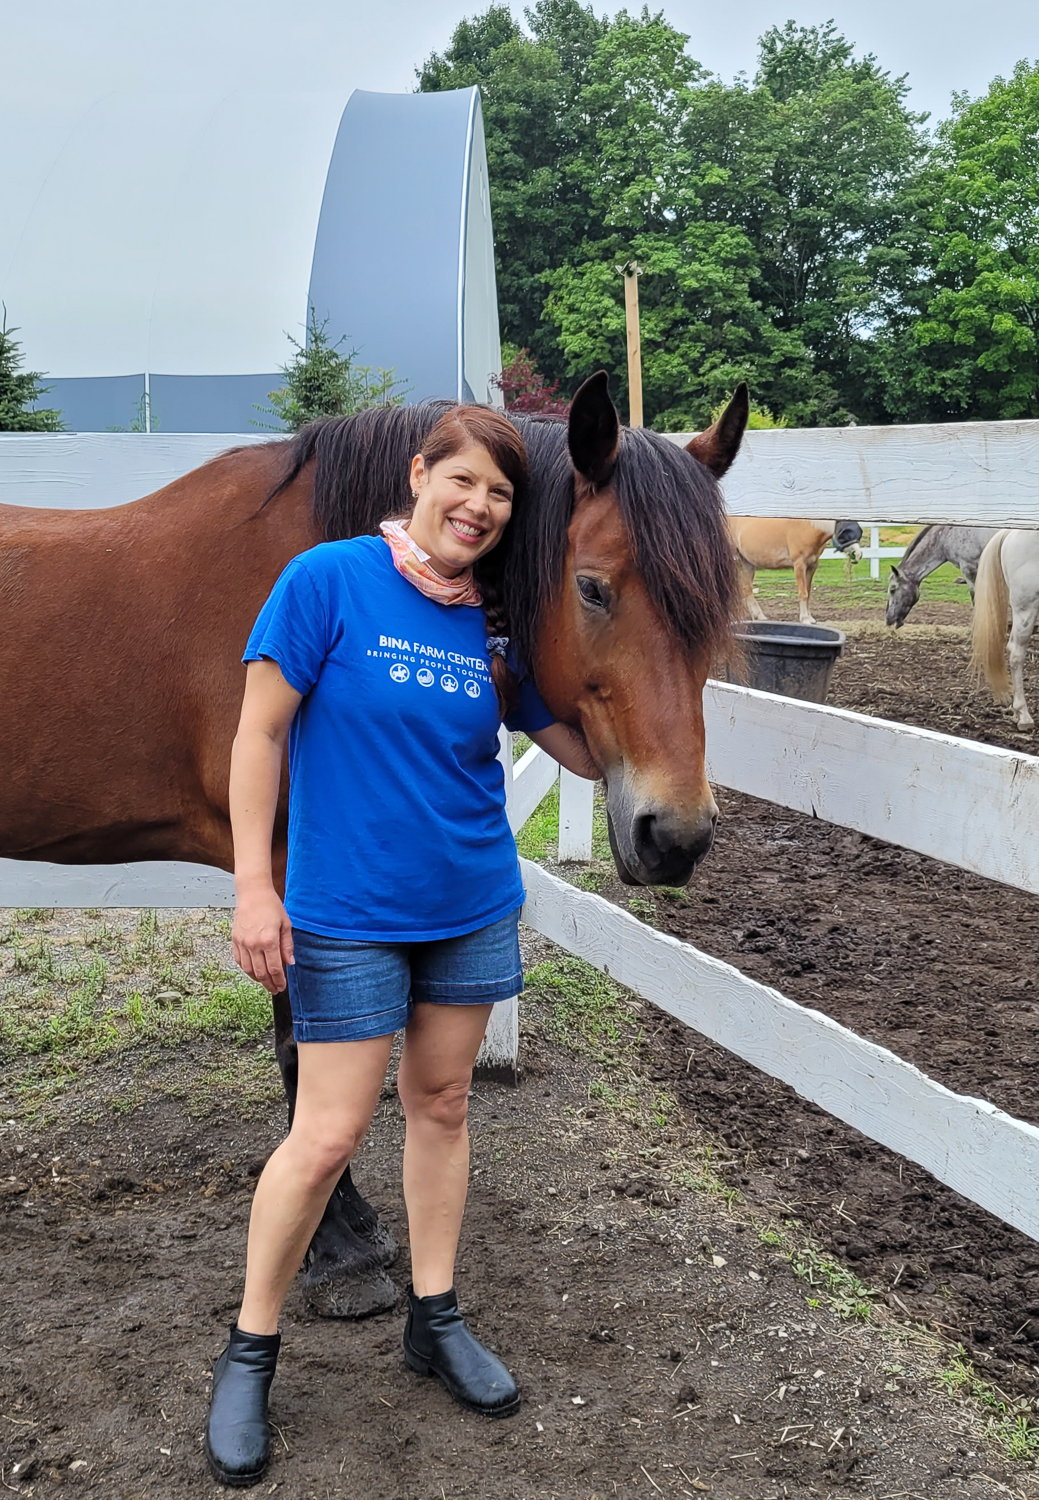 Yvonne Sierra with a horse at Bina Farm